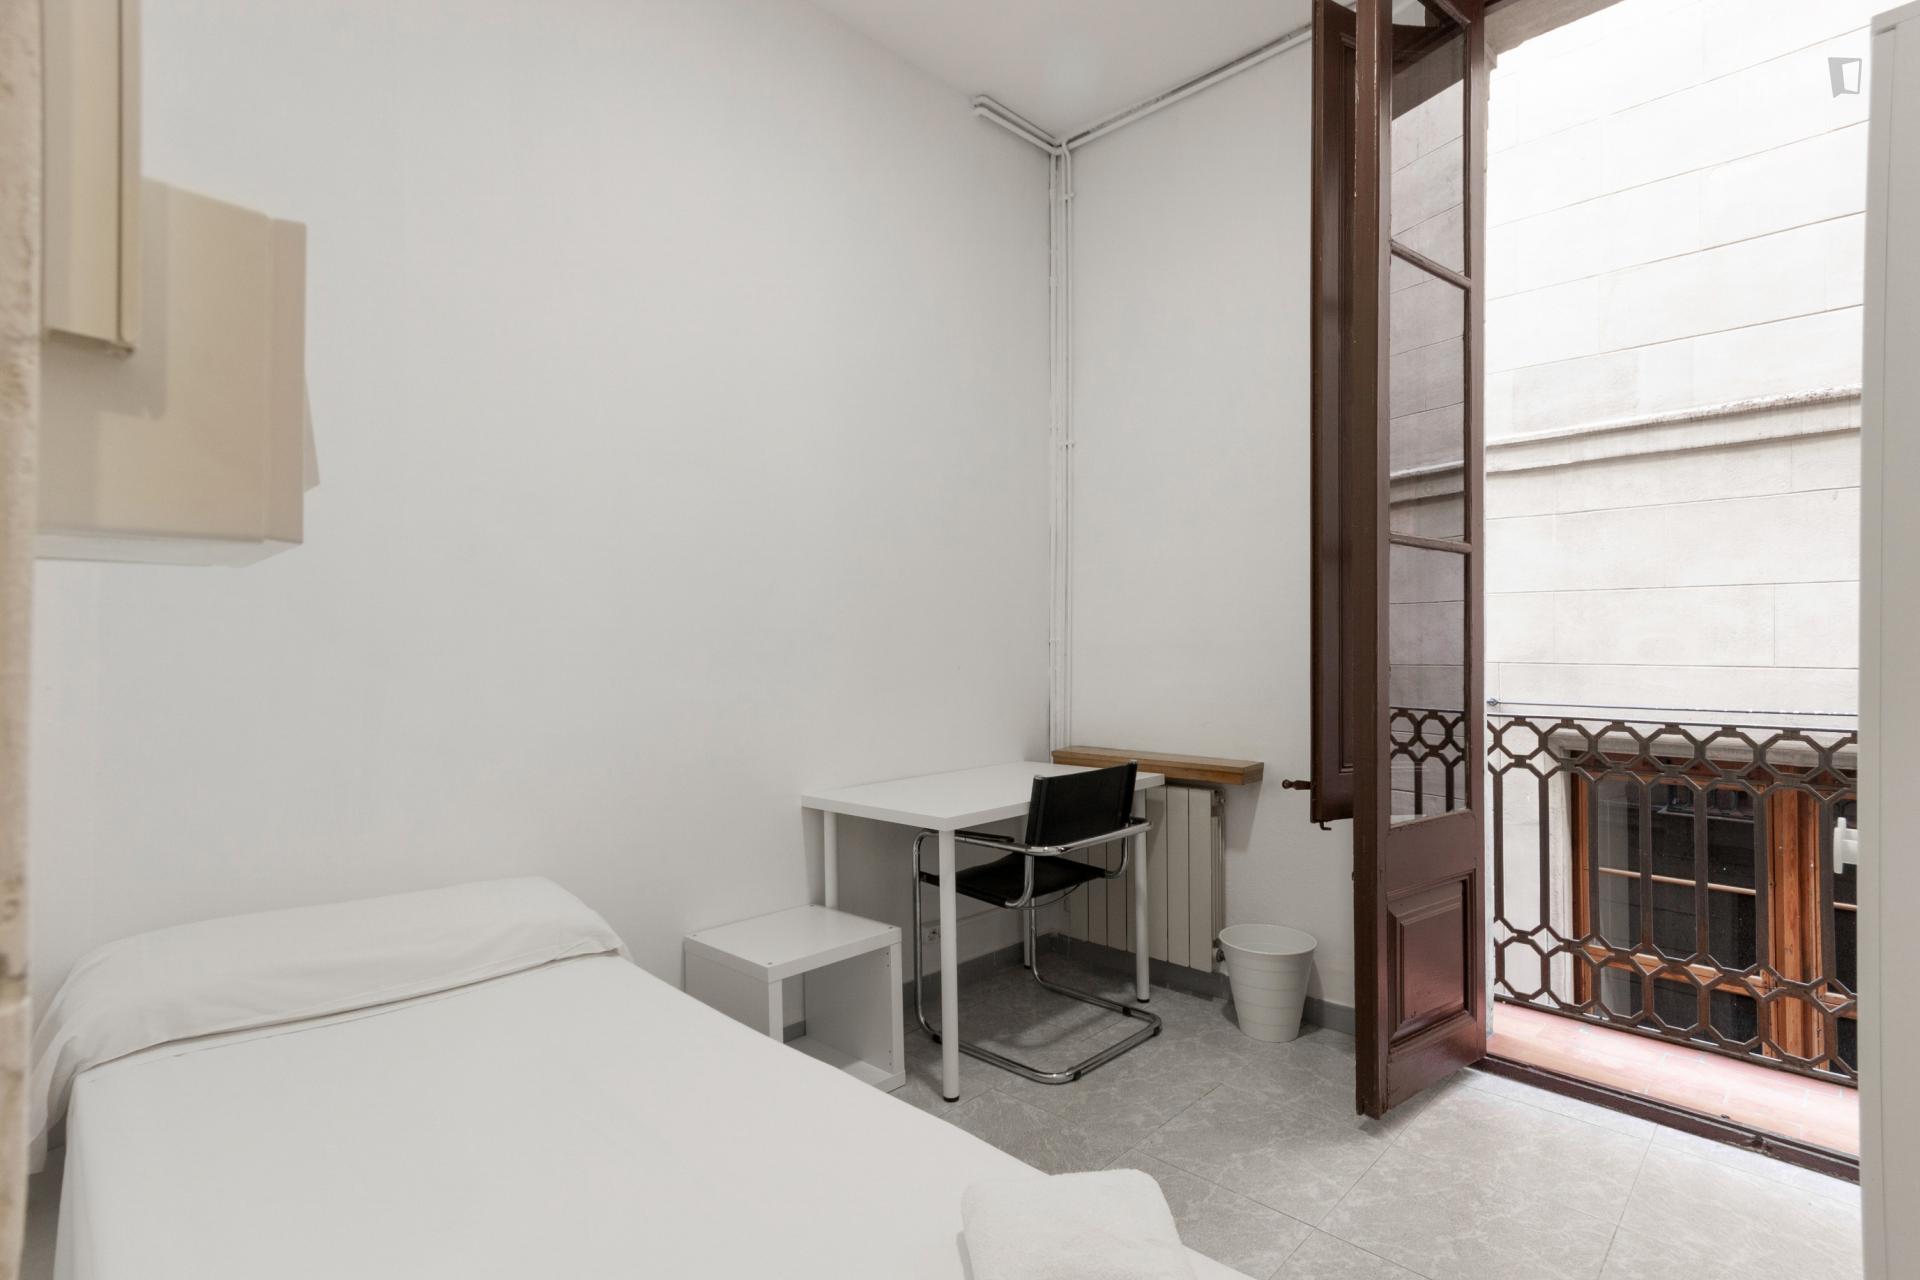 Gotic - 1 bedroom shared flat in Barcelona